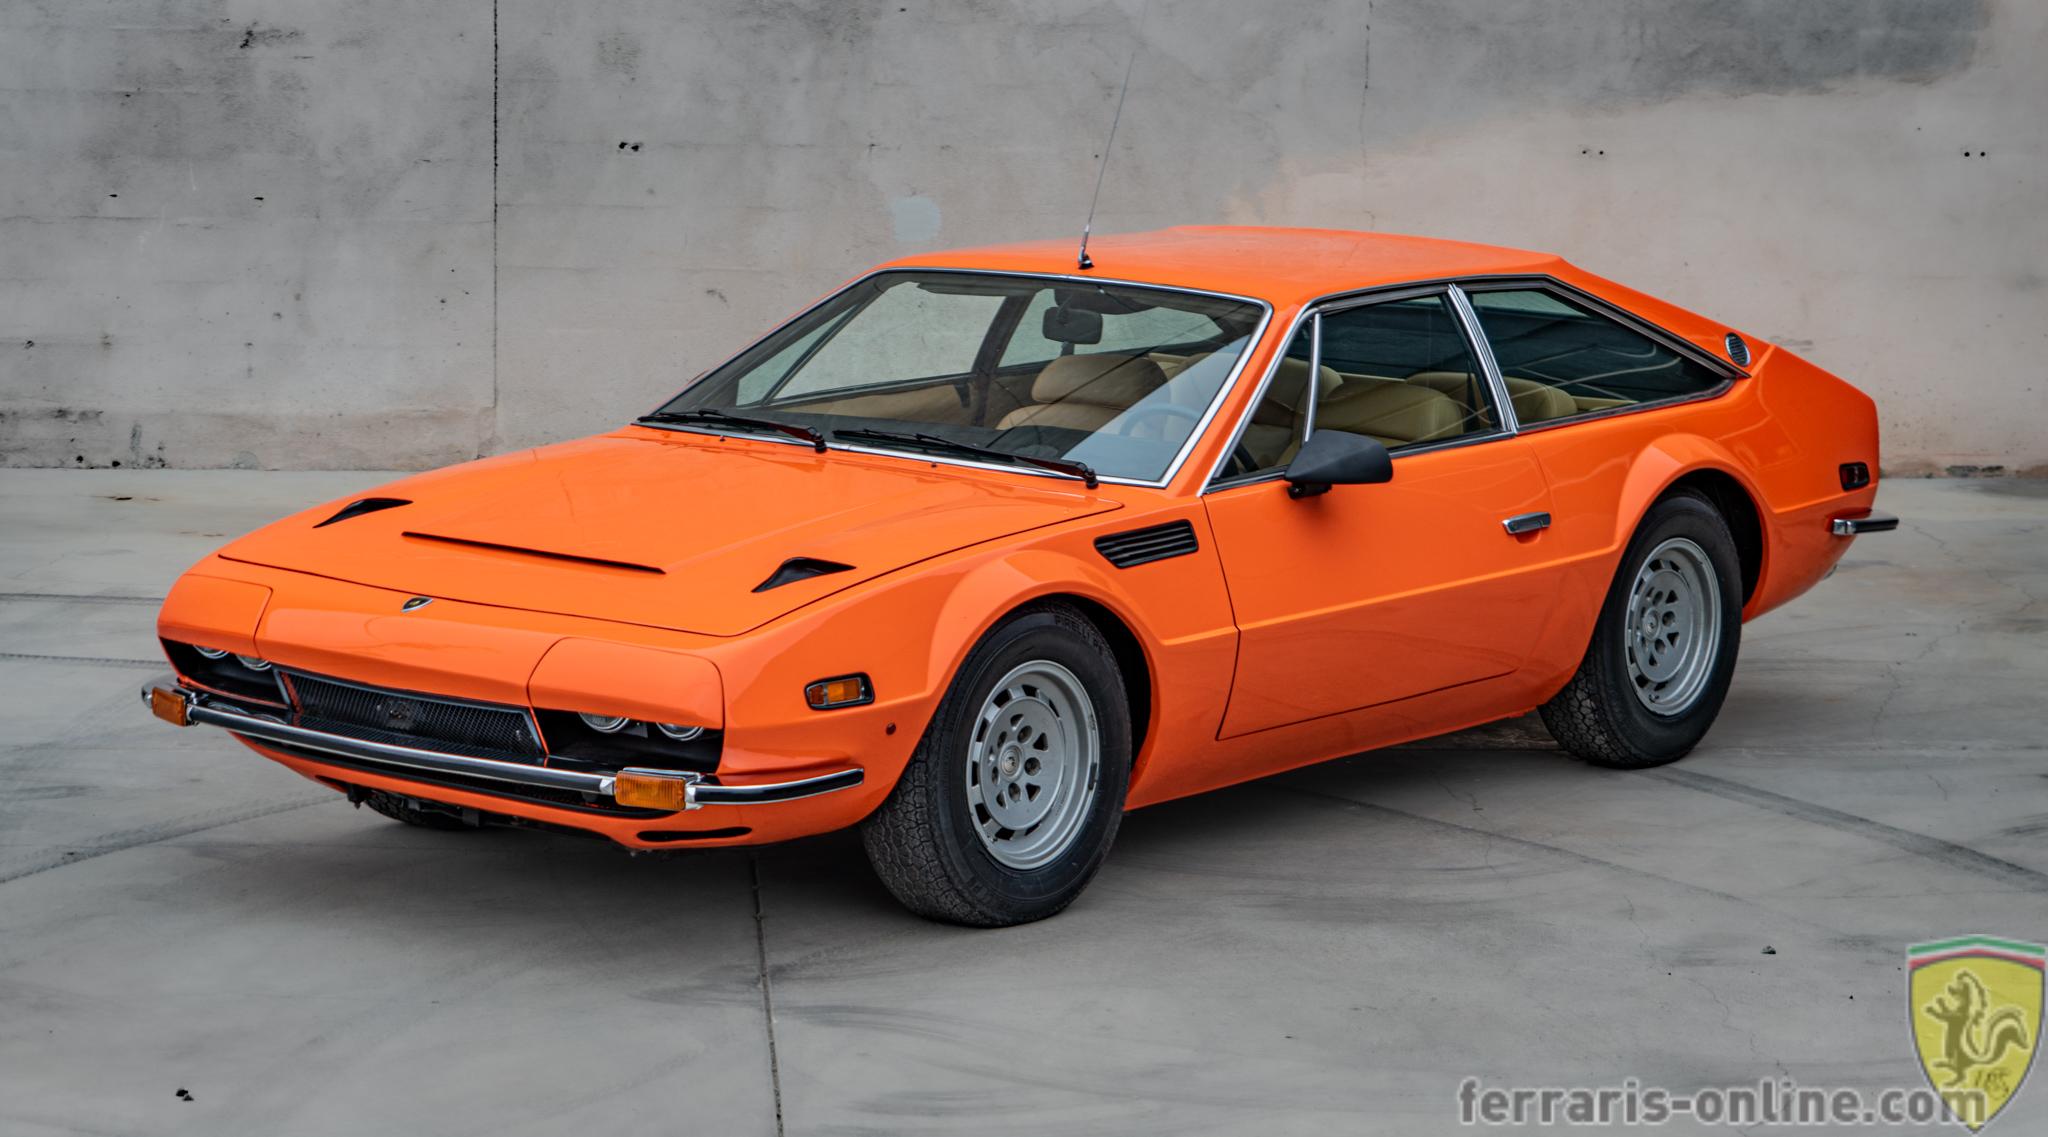 1975 Lamborghini Jarama GTS #10574 For Sale - Ferraris Online